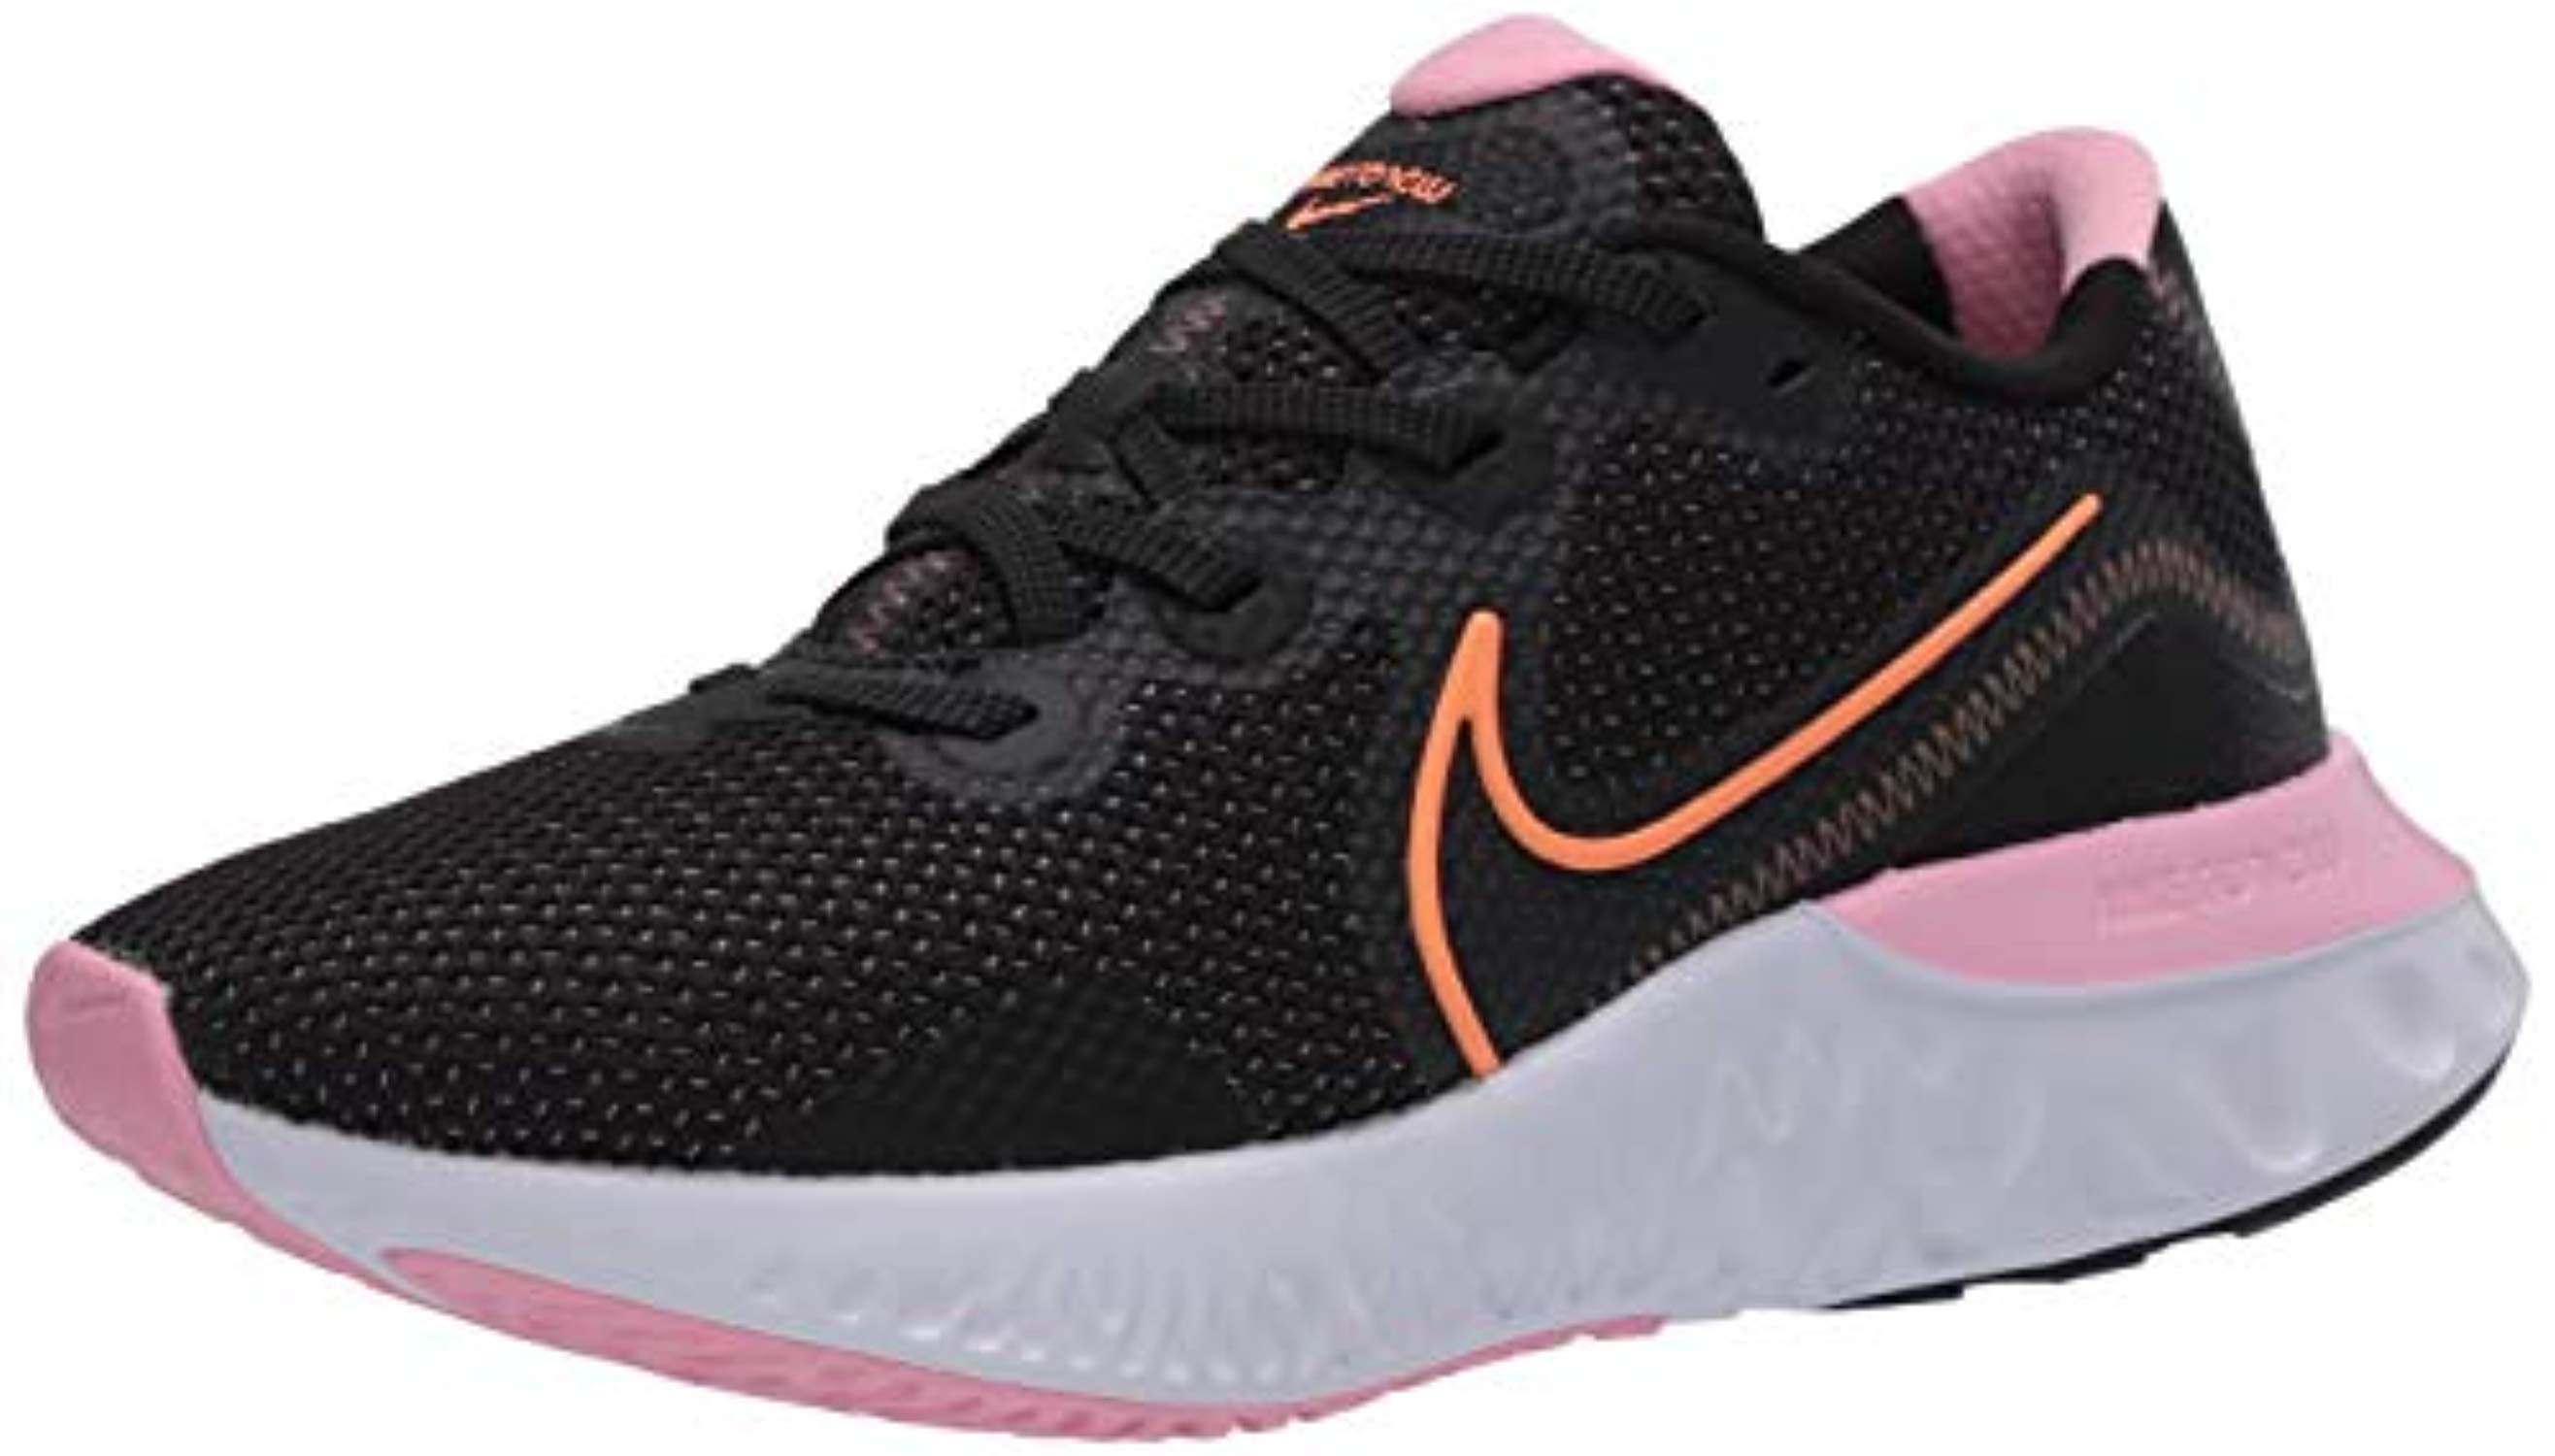 Nike - Nike Women's Renew Run Running Shoes (Black/Pink/Orange, Numeric_9_Point_5) - Walmart.com 